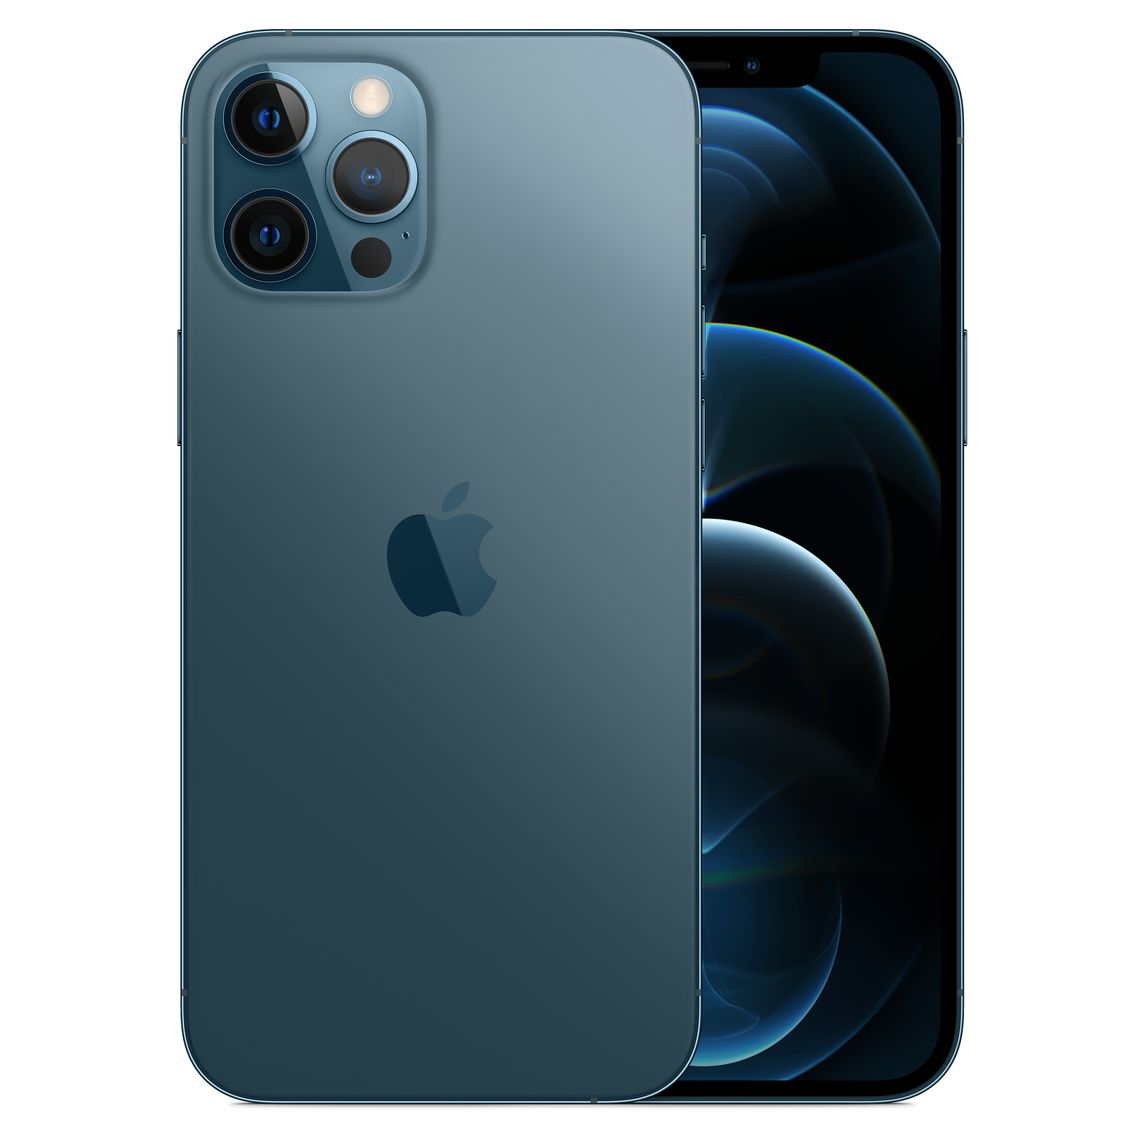 Apple Iphone 12 PRO MAX - 256 GB - Desbloqueado(Refurbished) Entrega gratis en Tijuana